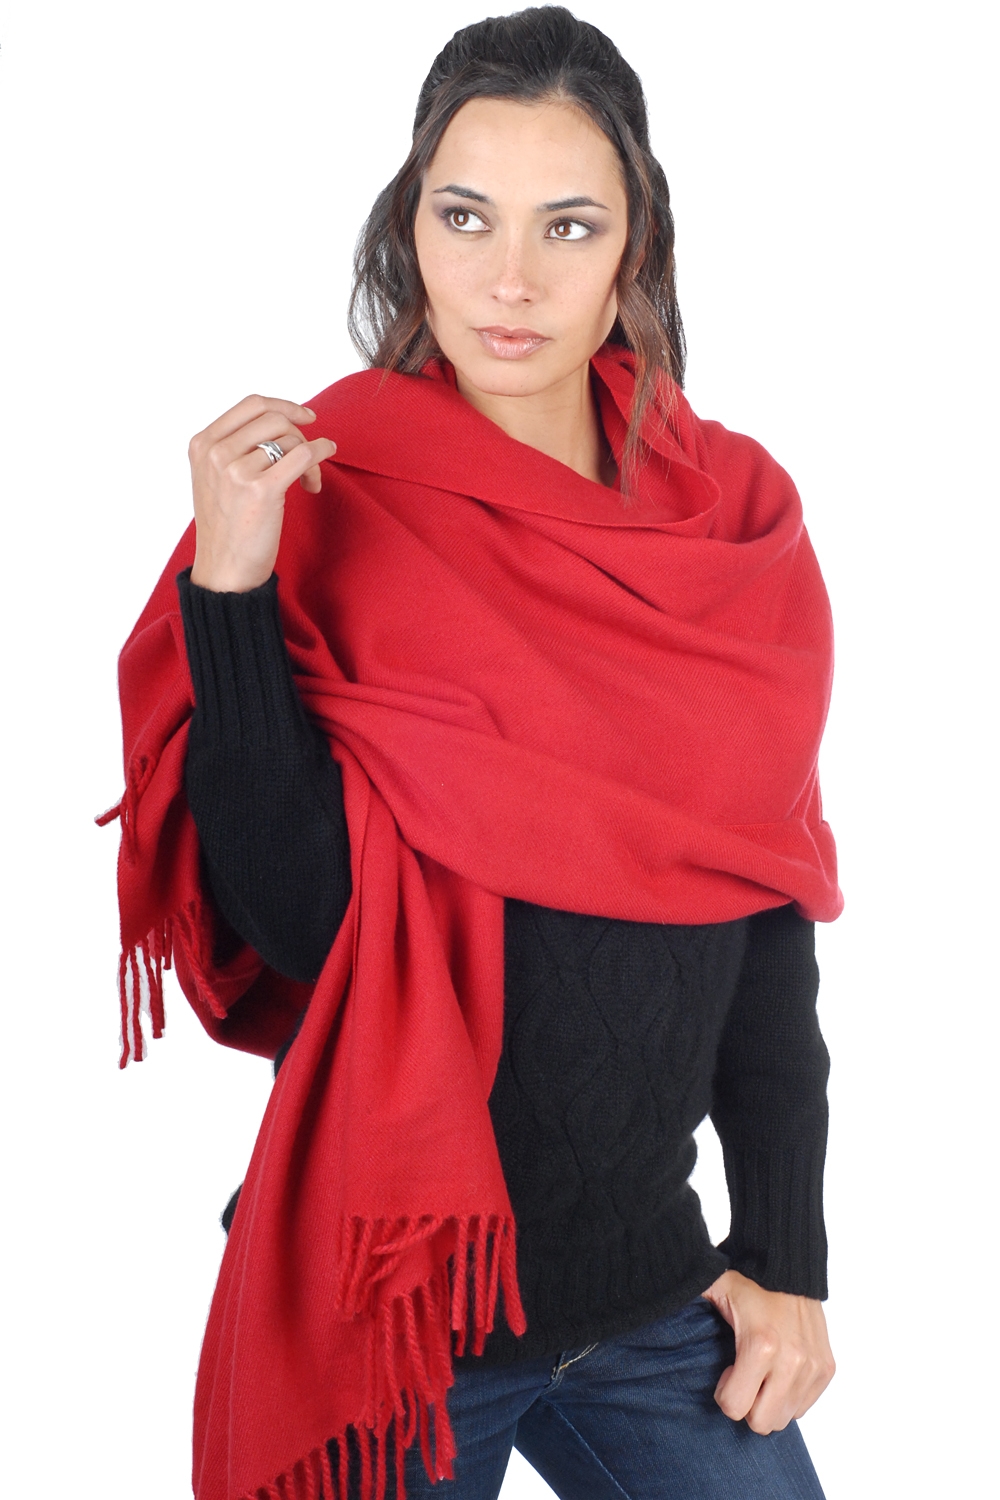 Cachemire pull femme niry rouge profond 200x90cm